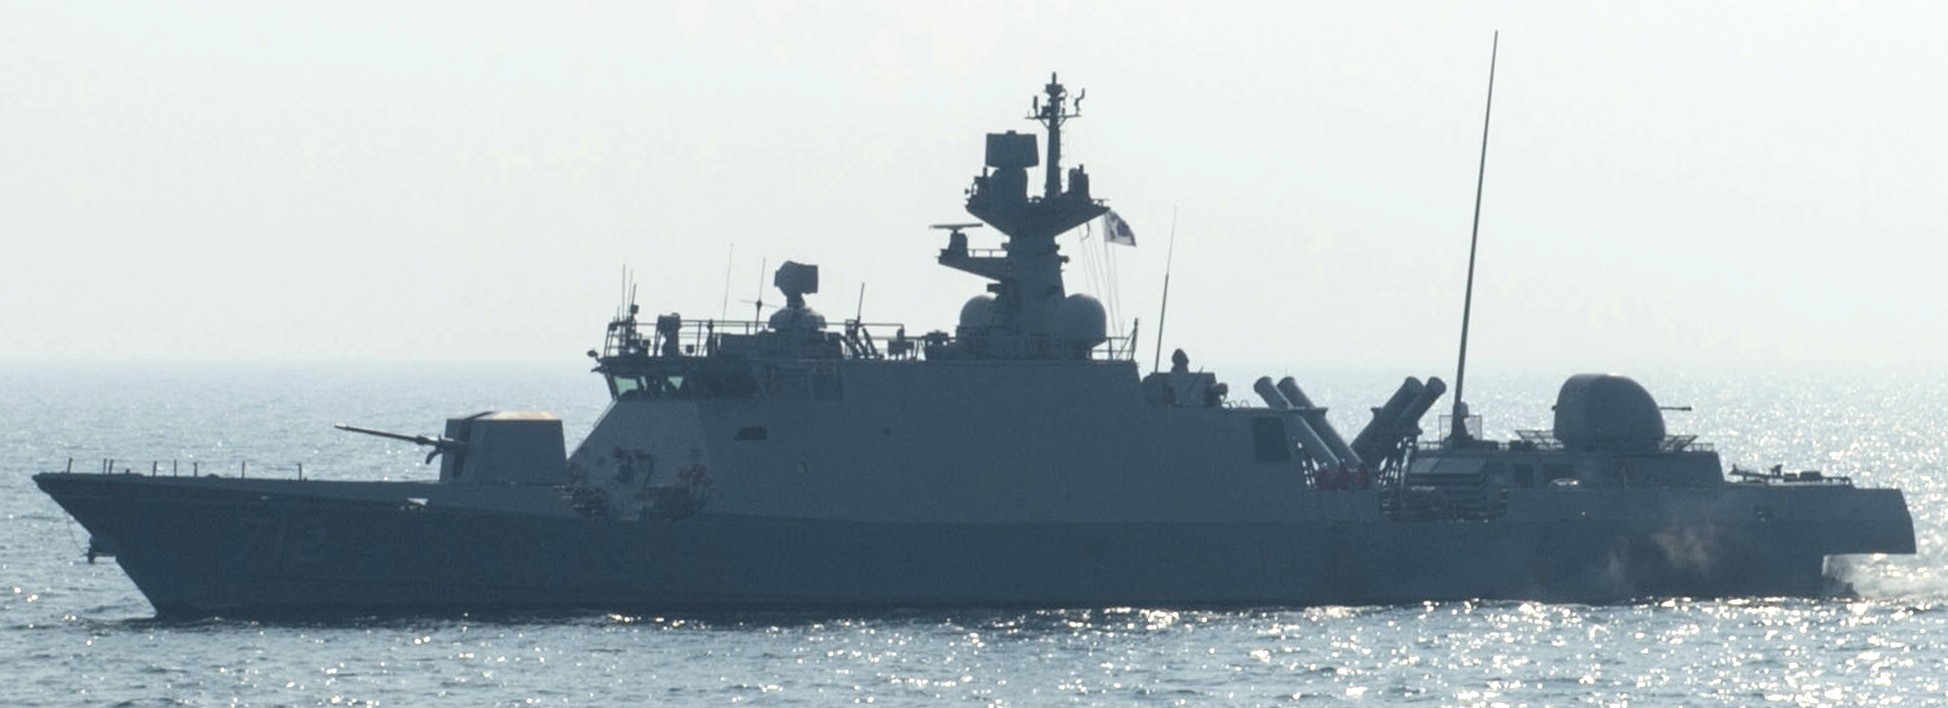 pkg-712 roks han sanggook yoon youngha class patrol missile vessel boat korean navy rokn hyundai wia 76mm gun nobong 40l70 ssm-700k hae sung 02